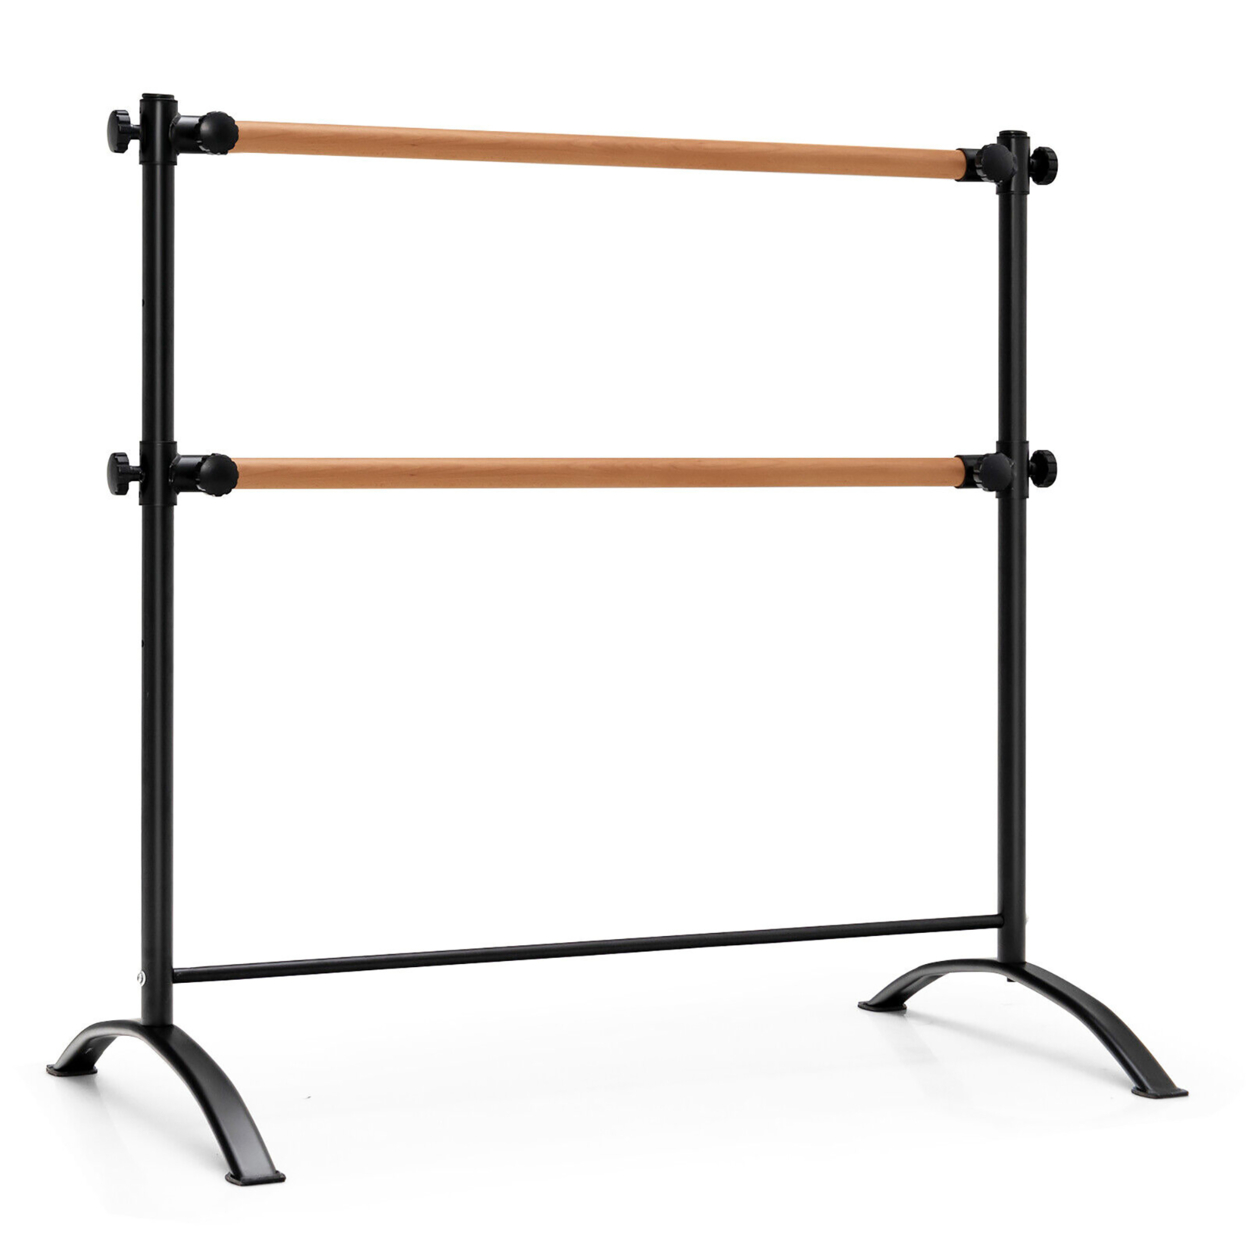 4FT Portable Ballet Barre Freestanding Dance Bar Adjustable Height Kids Adults